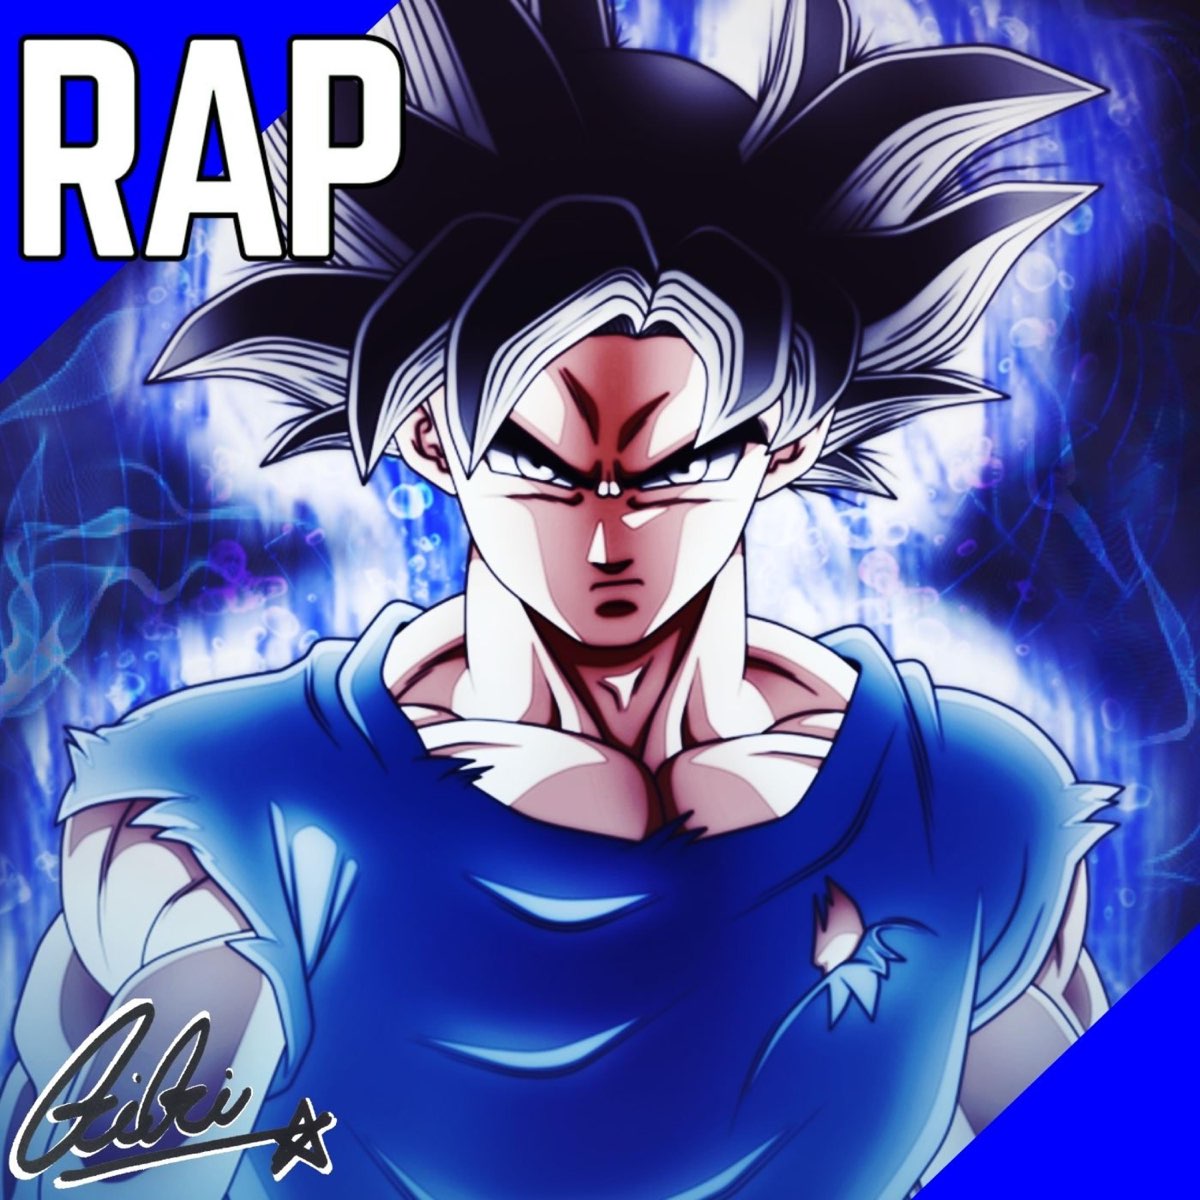 Rap de Goku Limit Breaker - Single by CriCri on Apple Music